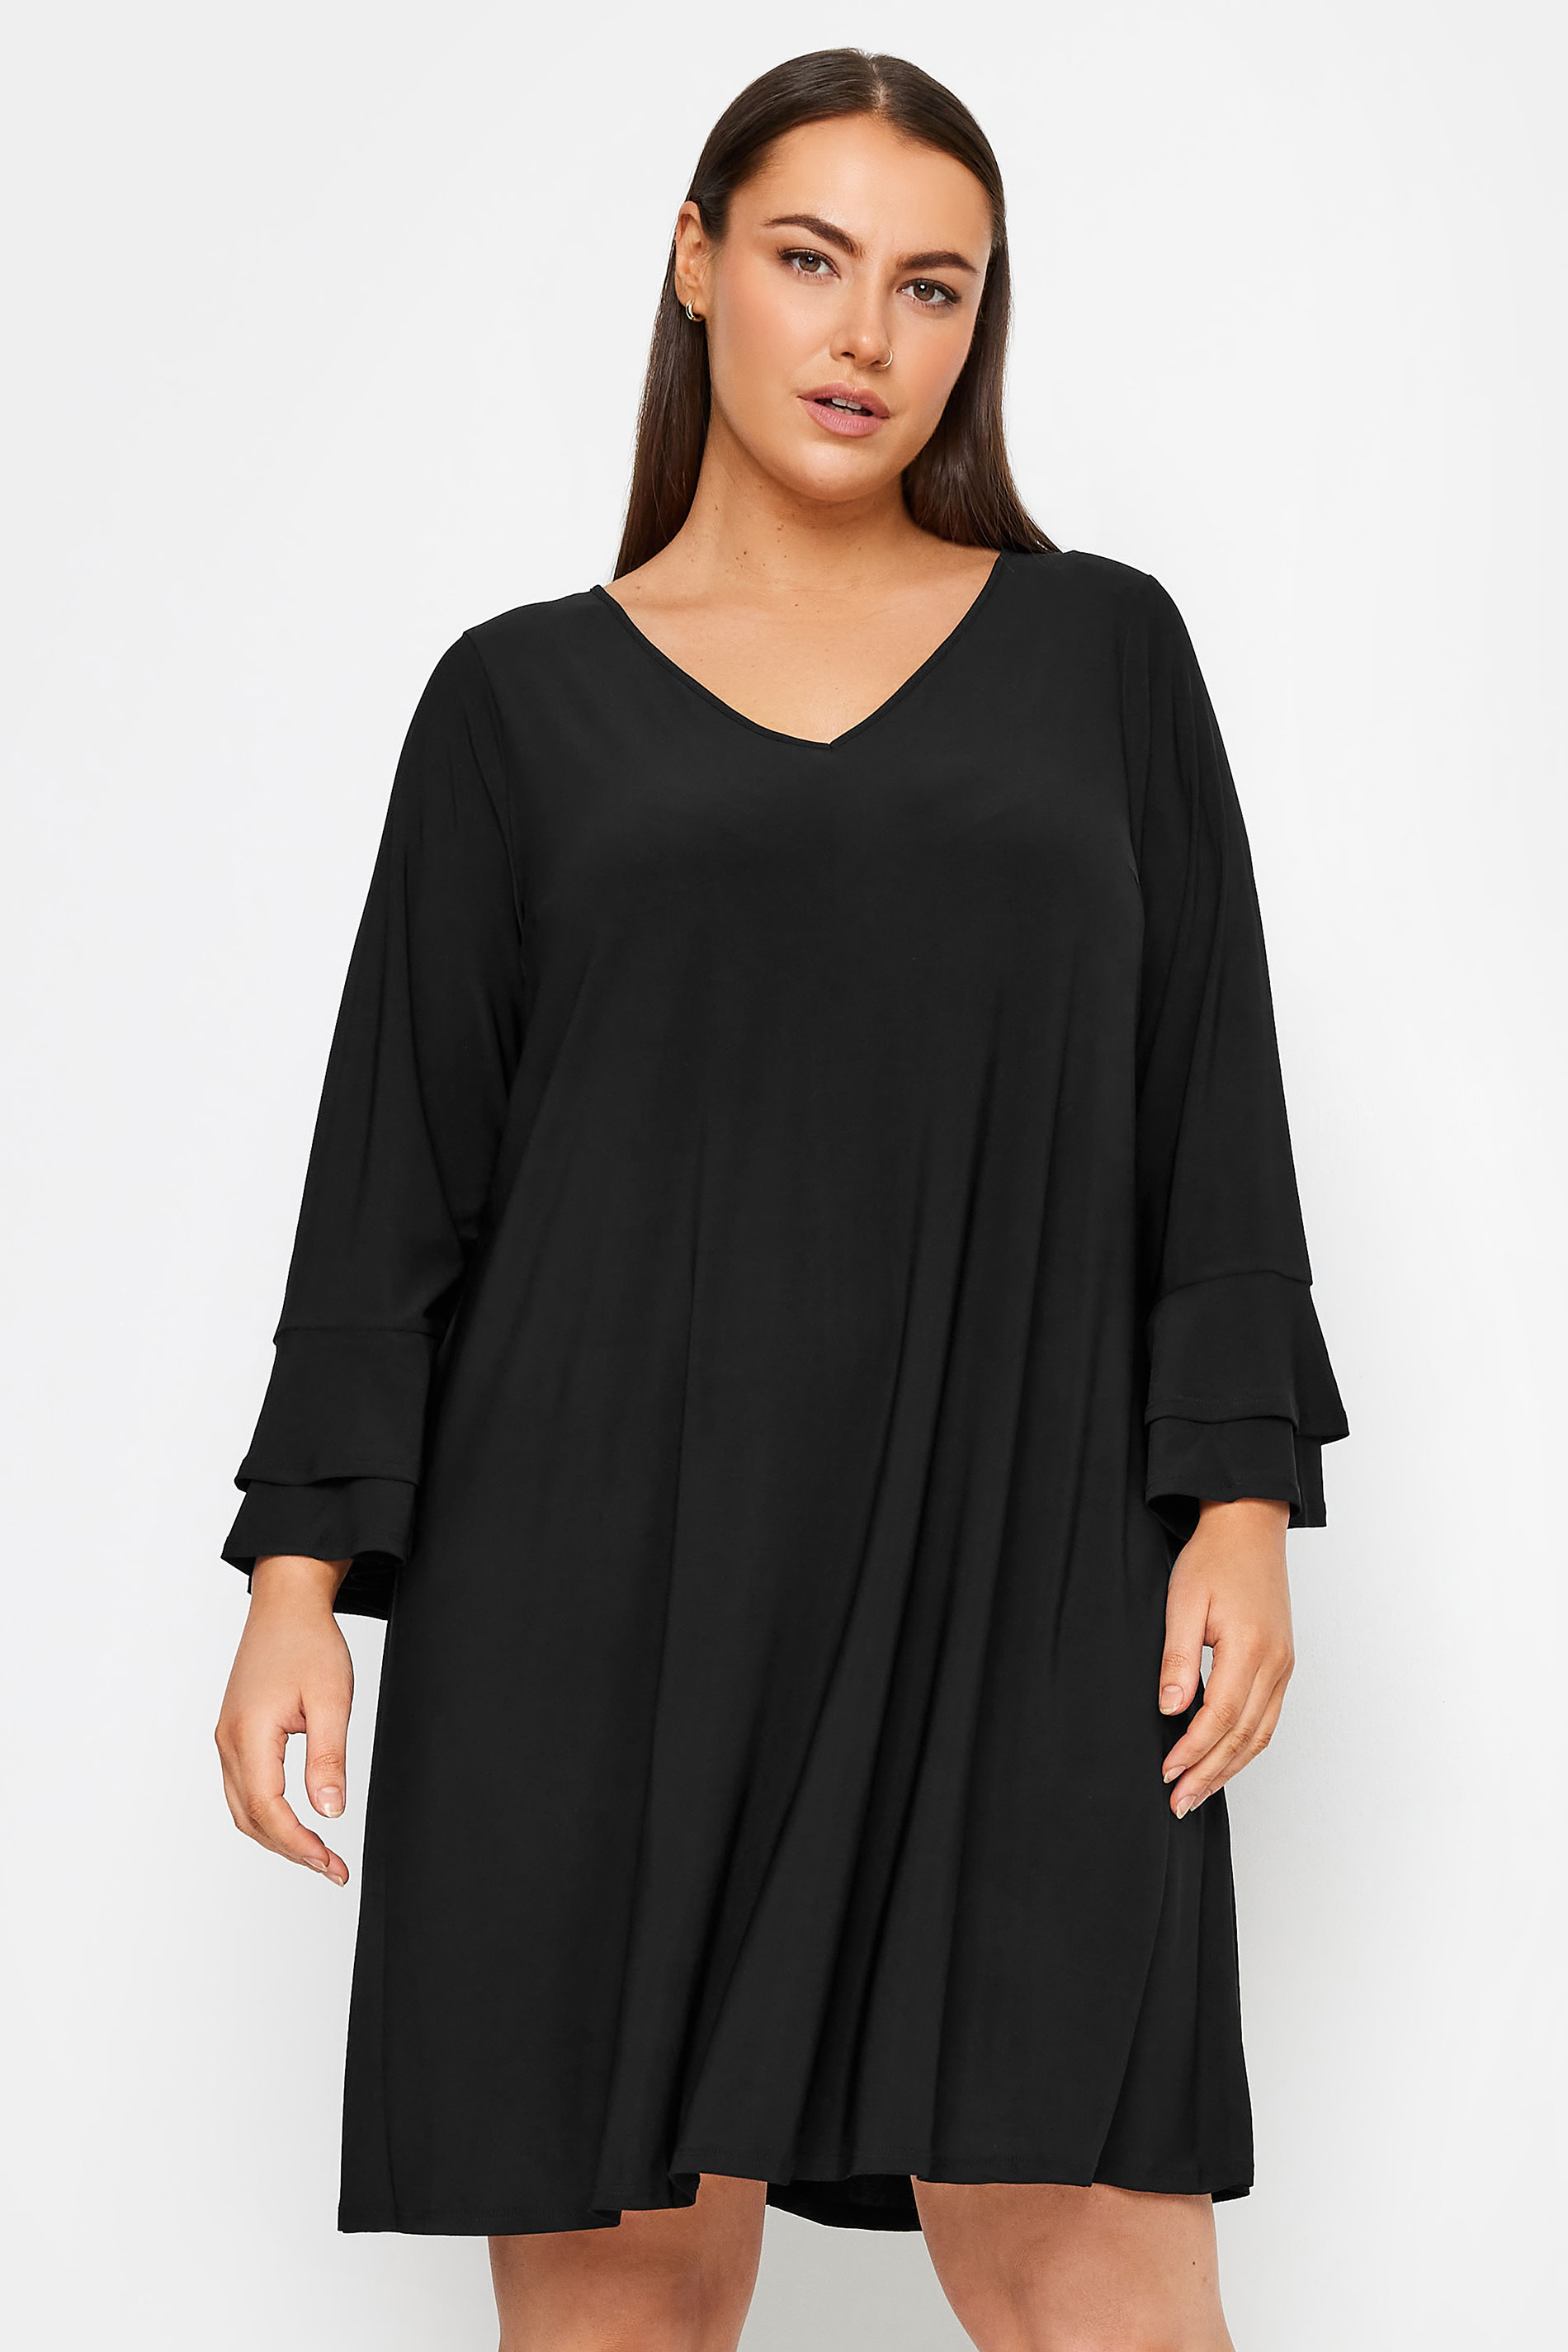 Frill Sleeve Black Plain Dress 1